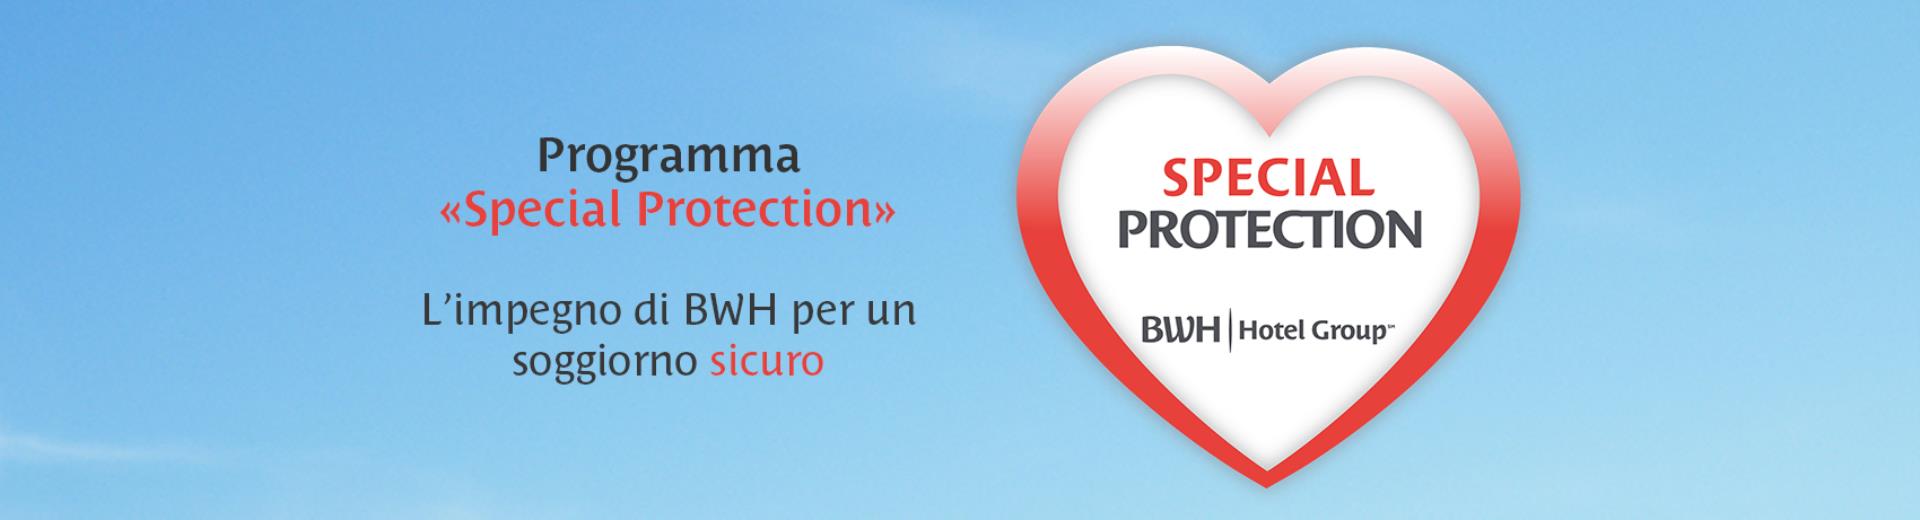 Programma Special Protection